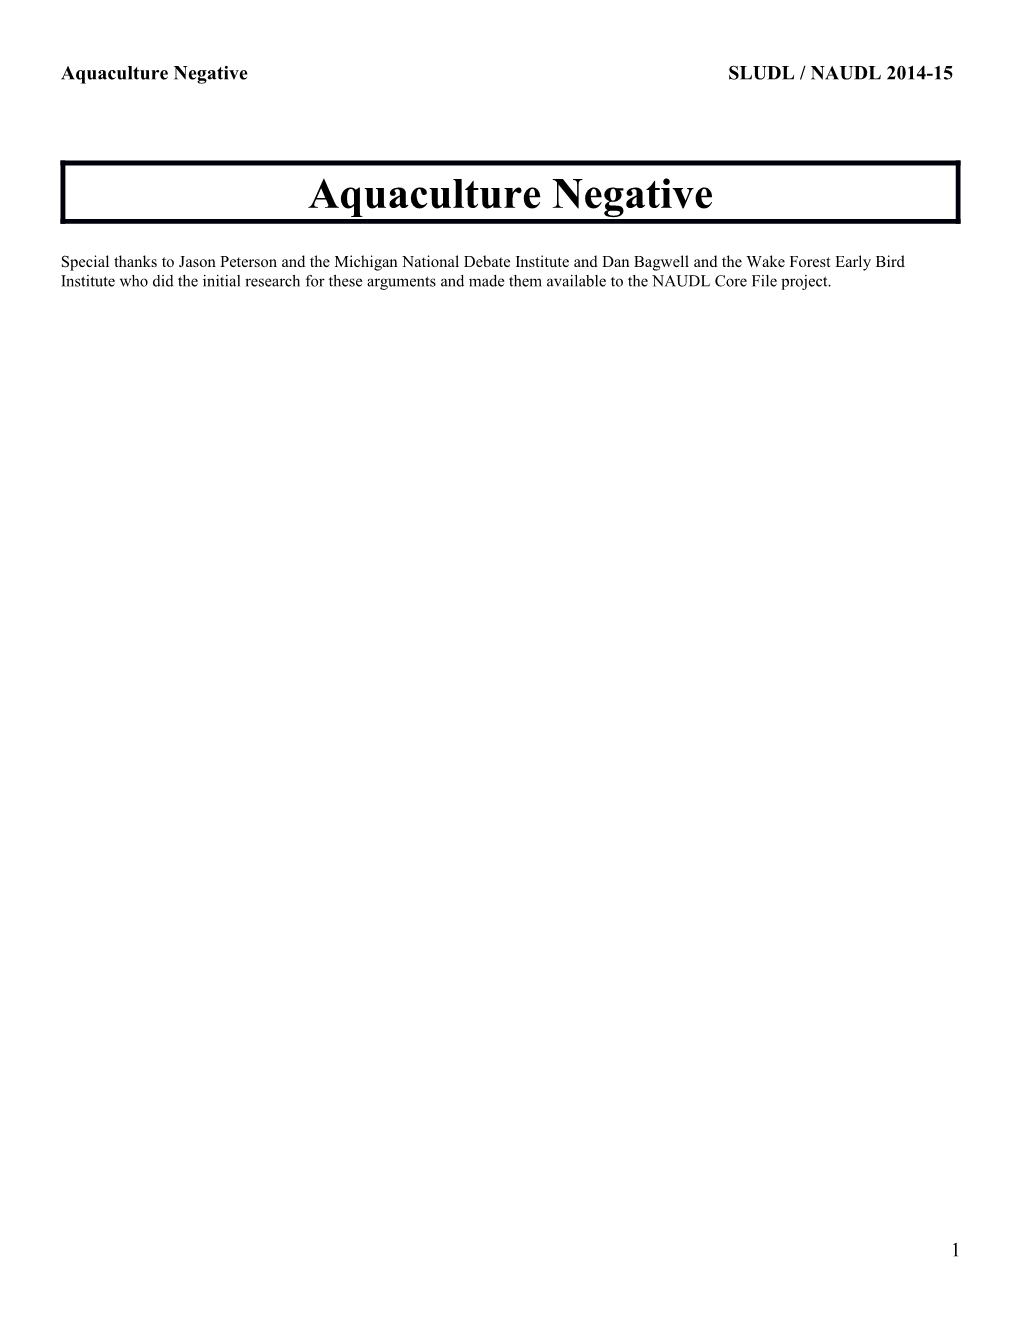 Aquaculture Negativesludl / NAUDL 2014-15